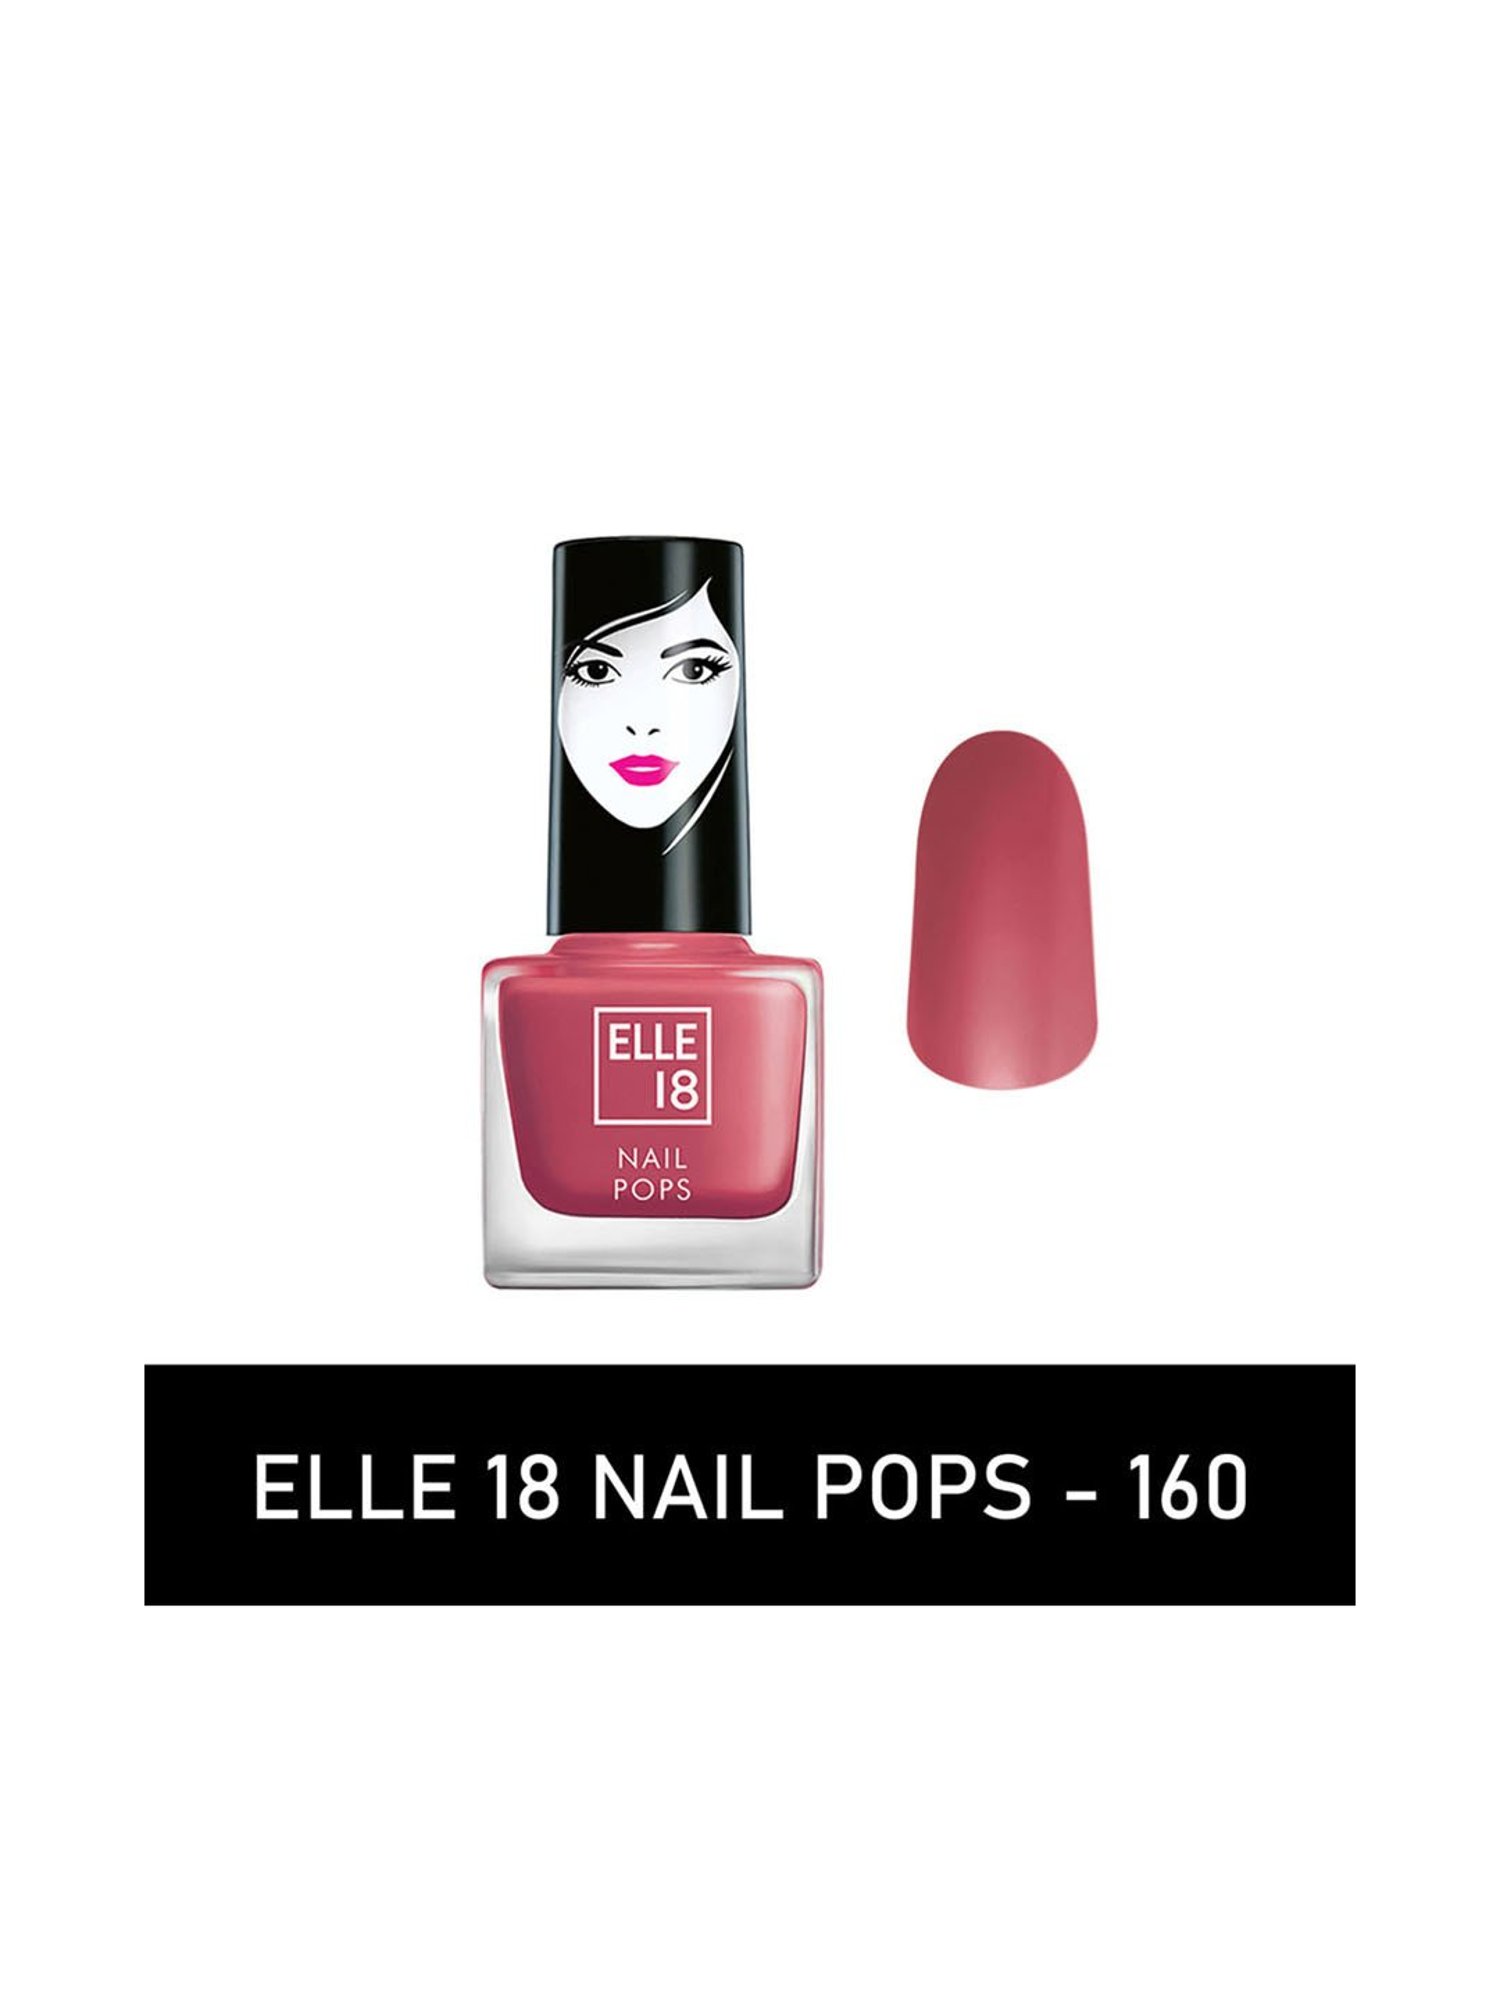 Elle18 Nail Pops nail polish review and swatches| Affordable Nail Polish| Elle  18 - YouTube